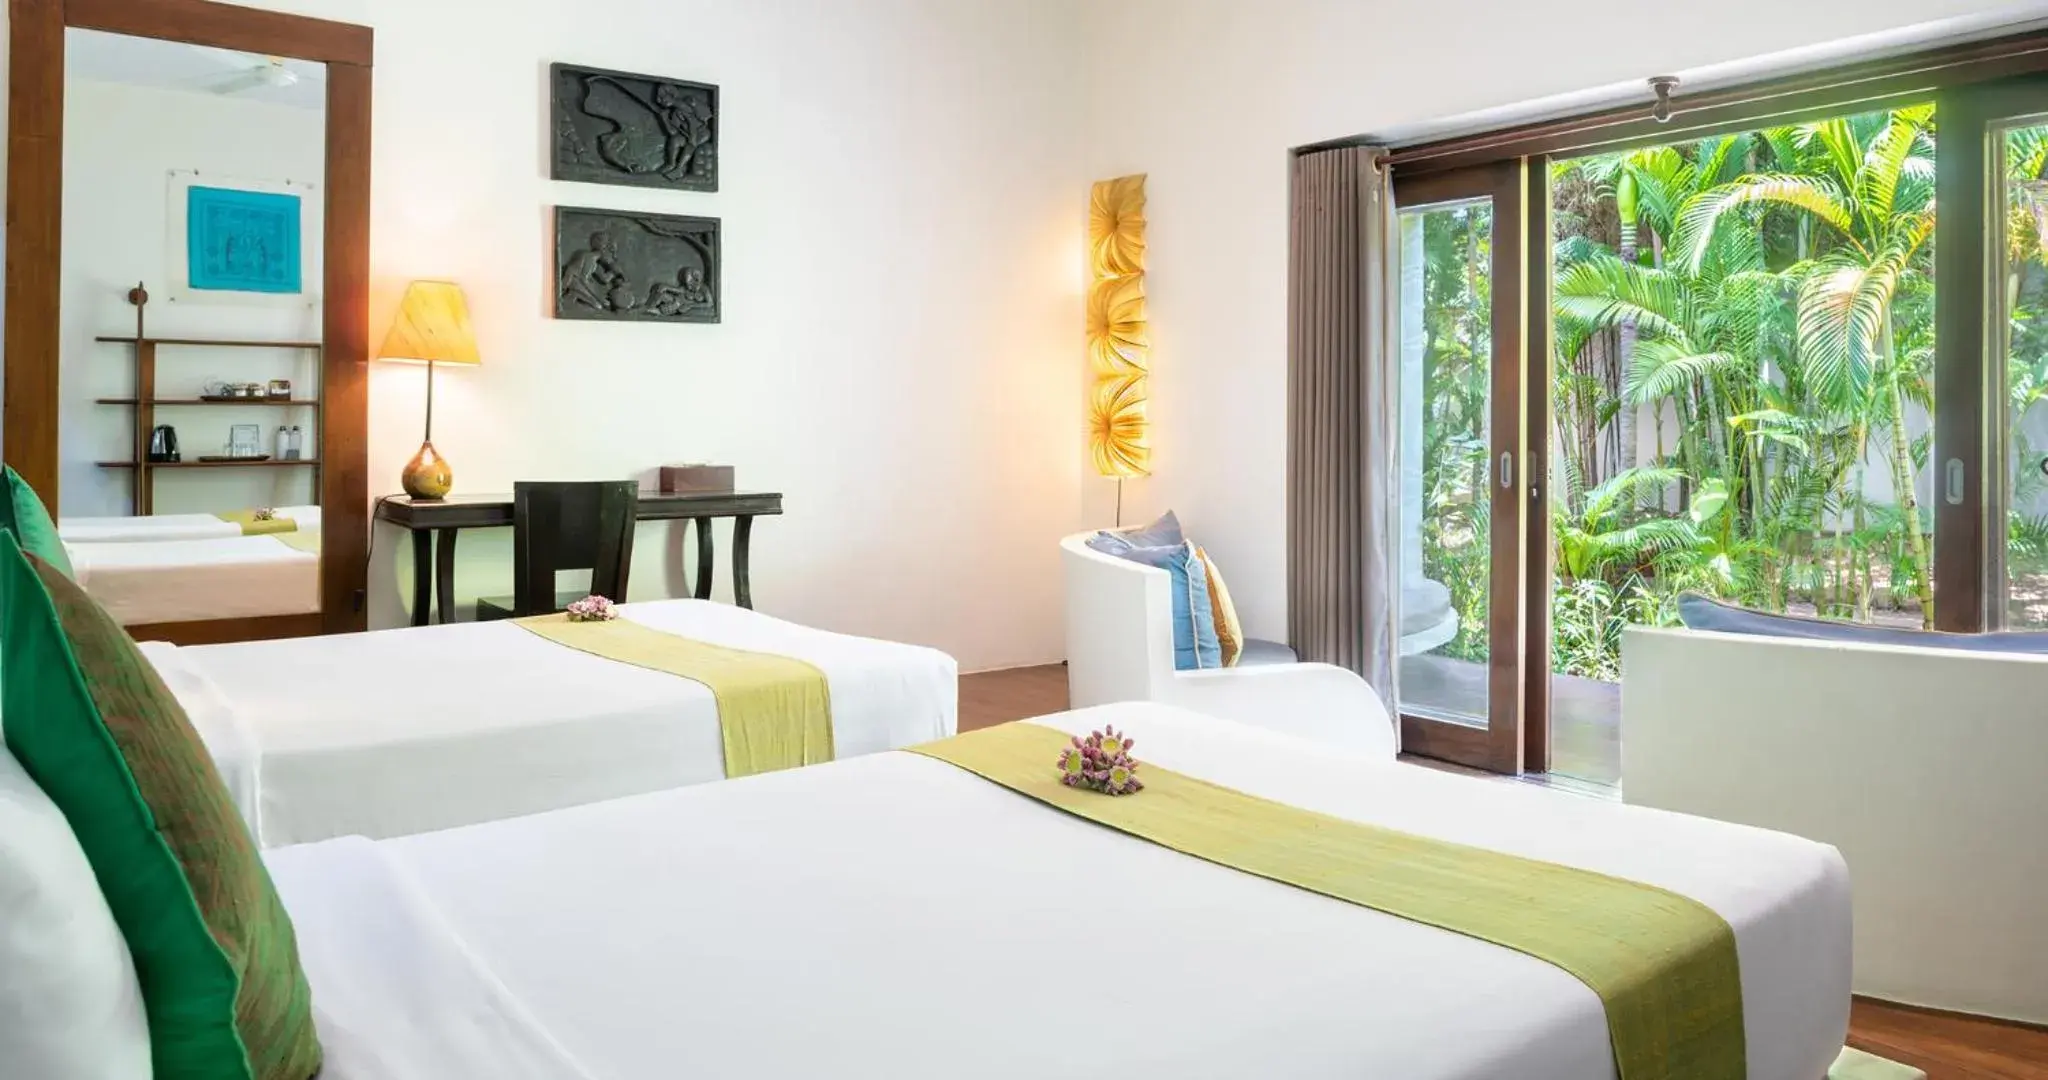 Bed in Navutu Dreams Resort & Wellness Retreat